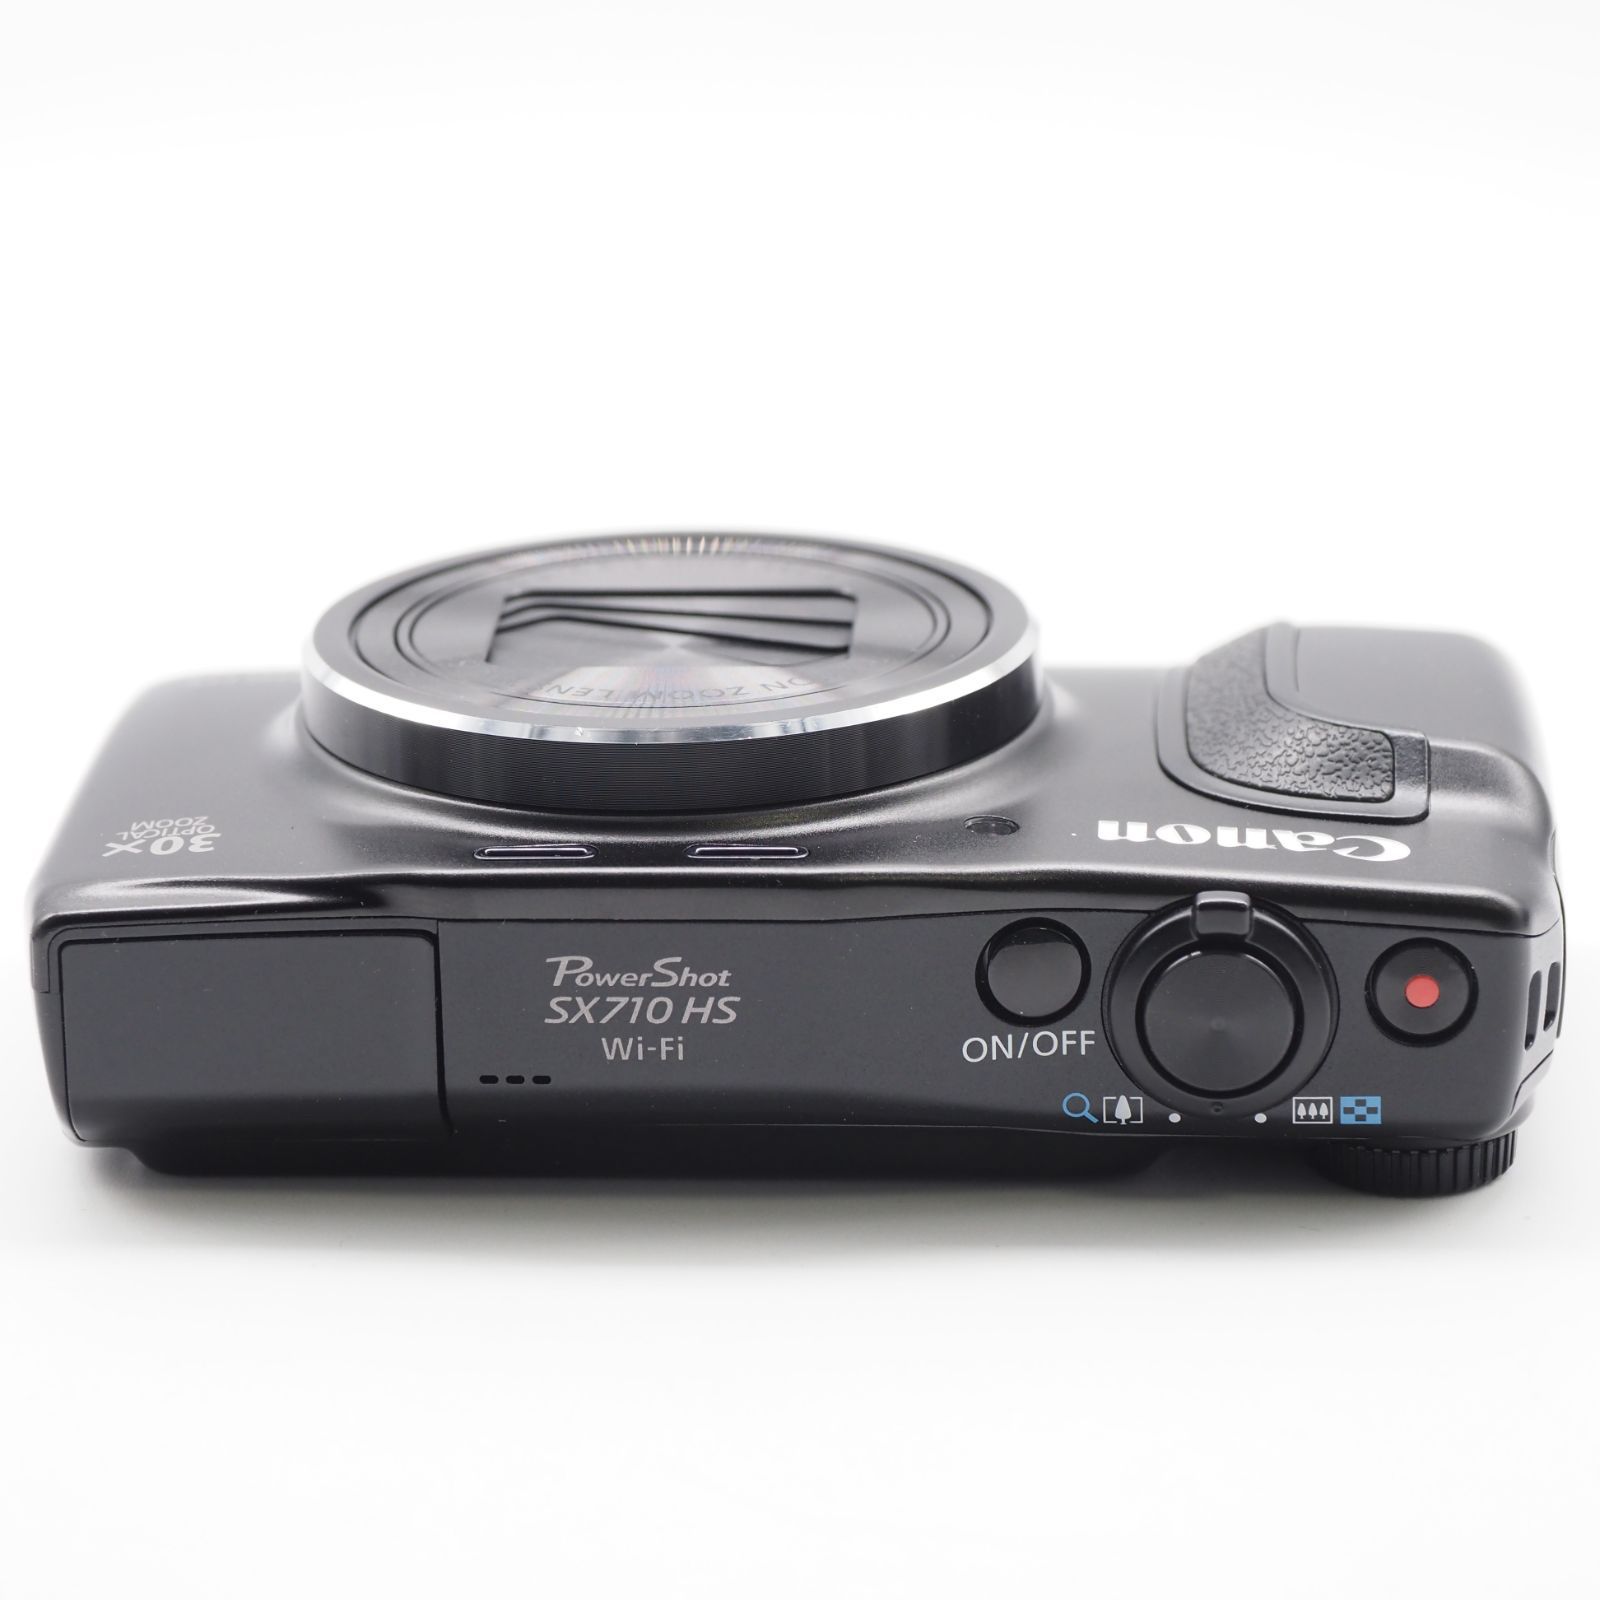 CanonデジカメPowerShot SX710 HS PSSX710HS(BK - デジタルカメラ